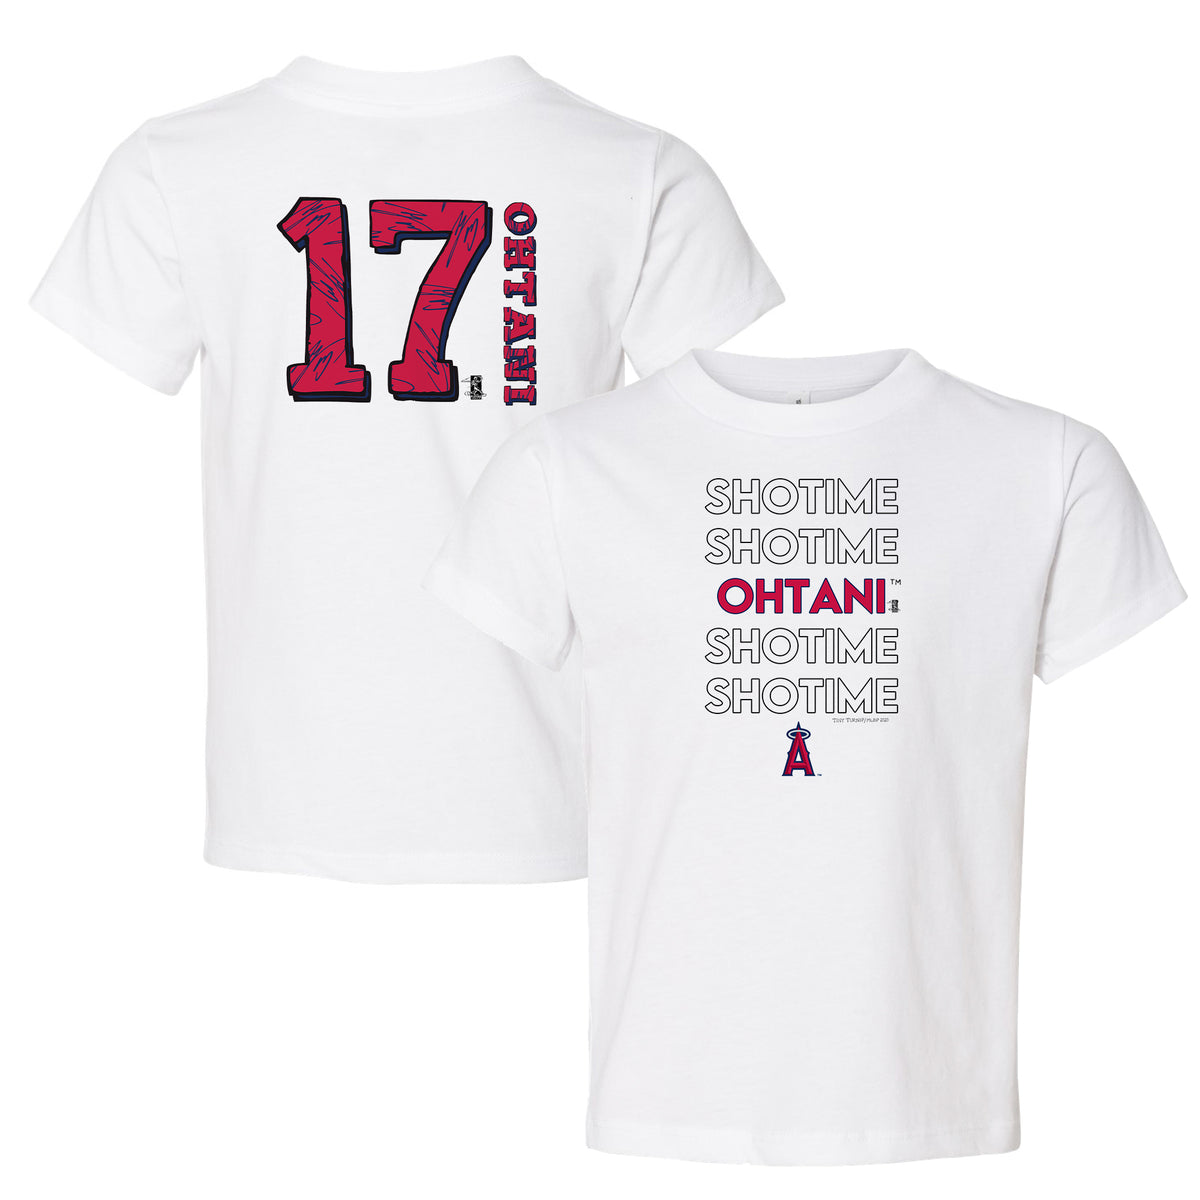 St. Louis Cardinals Spring Training 2023 Shirt - High-Quality Printed Brand